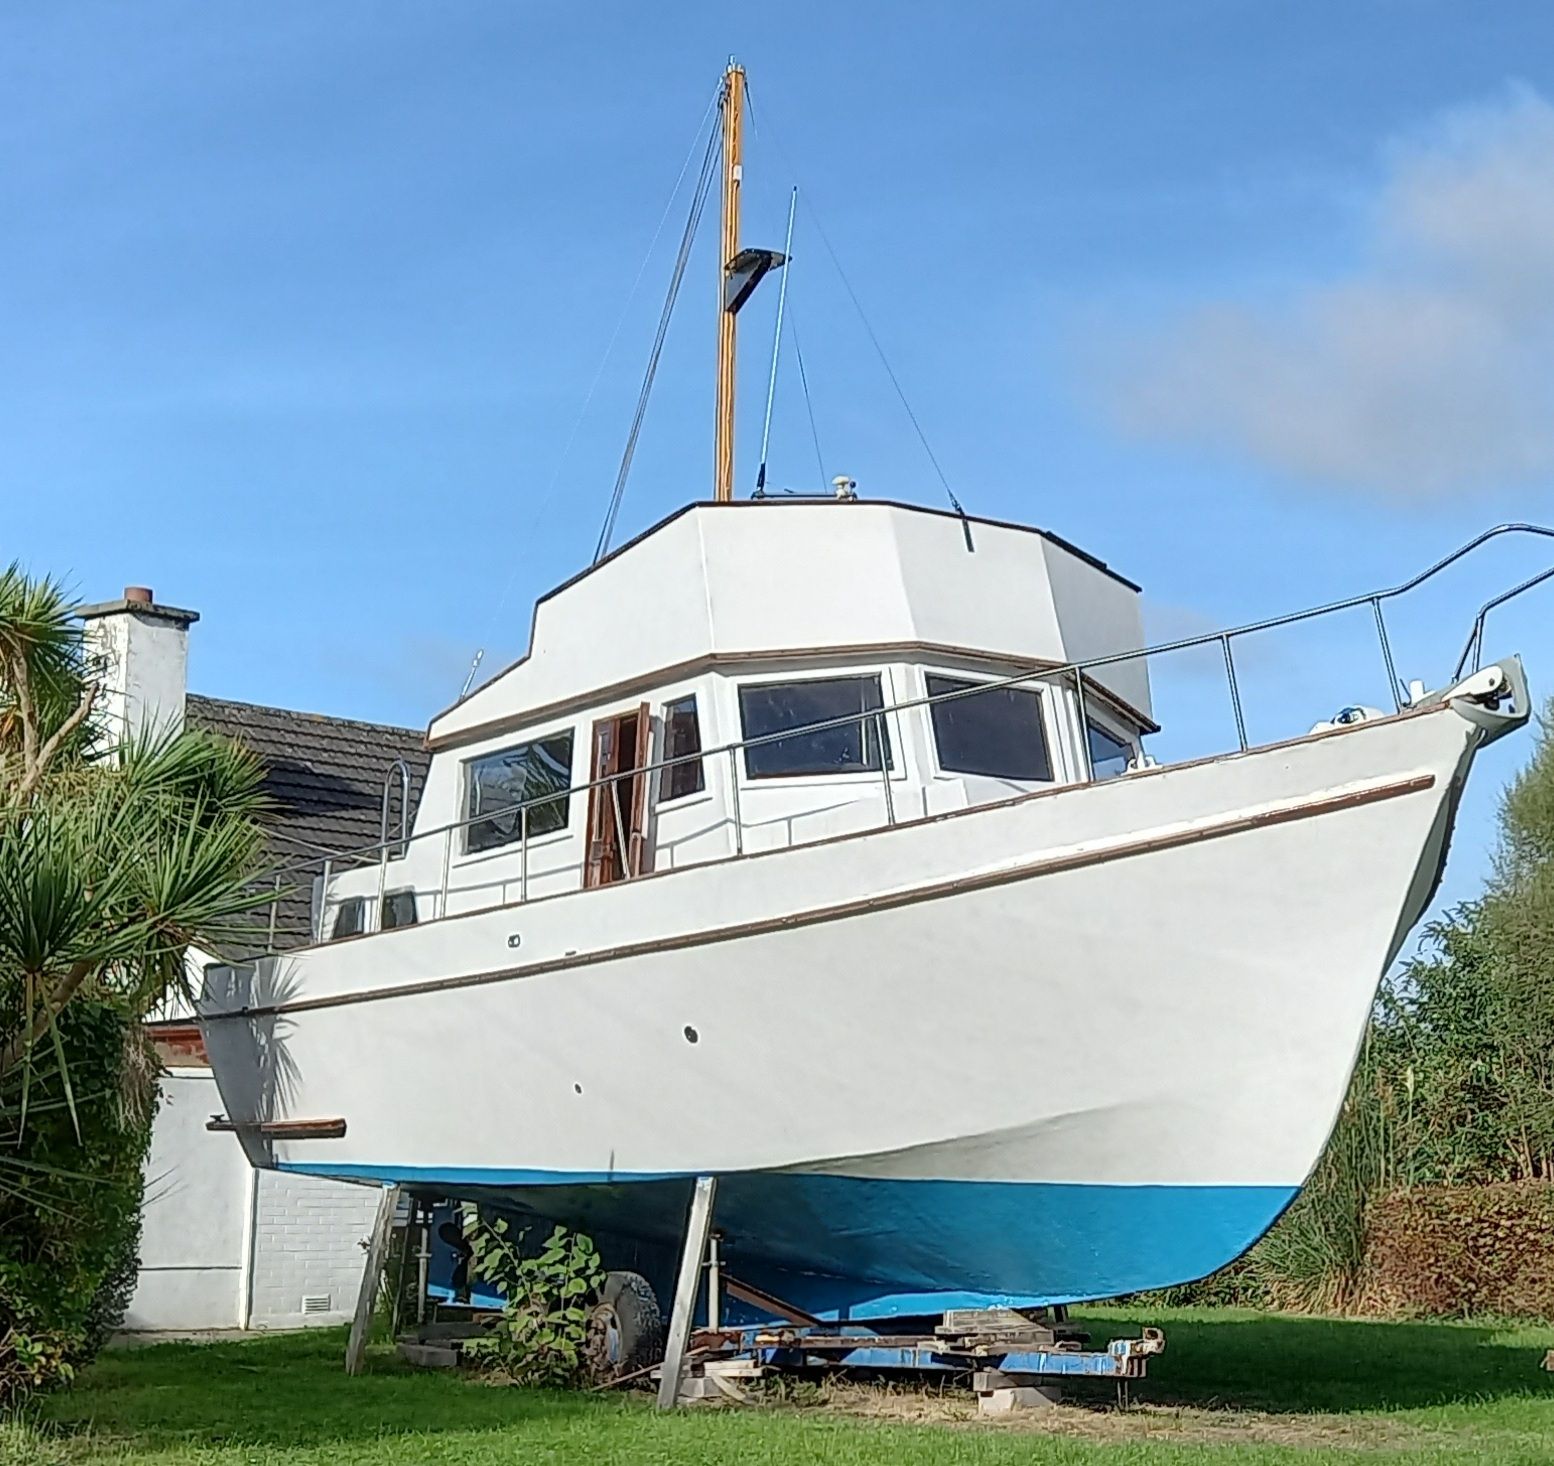 Garden Built Boat in Dublin (Part 1) | Season 2 – Episode 6